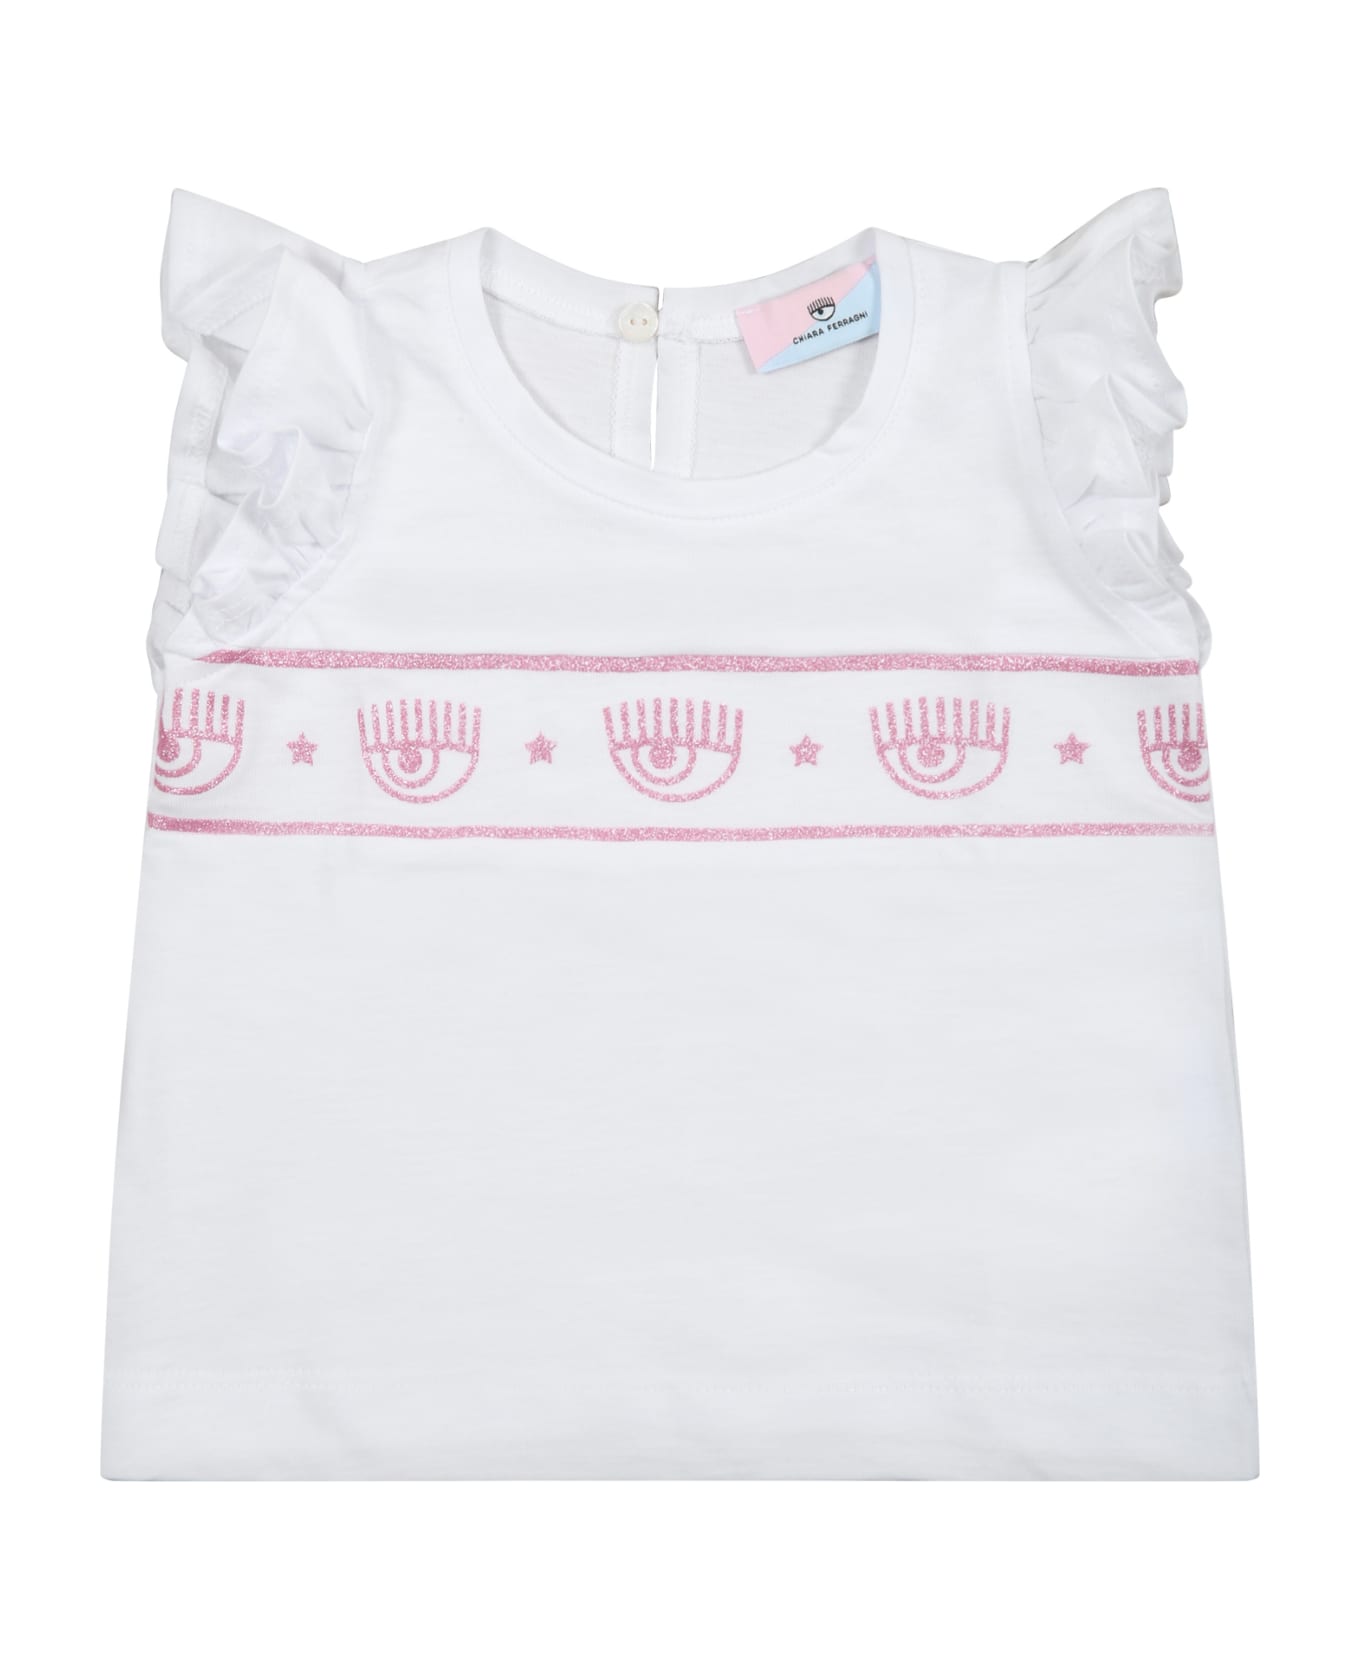 Chiara Ferragni White T-shirt For Baby Girl With Iconic Lurex Eyes - White